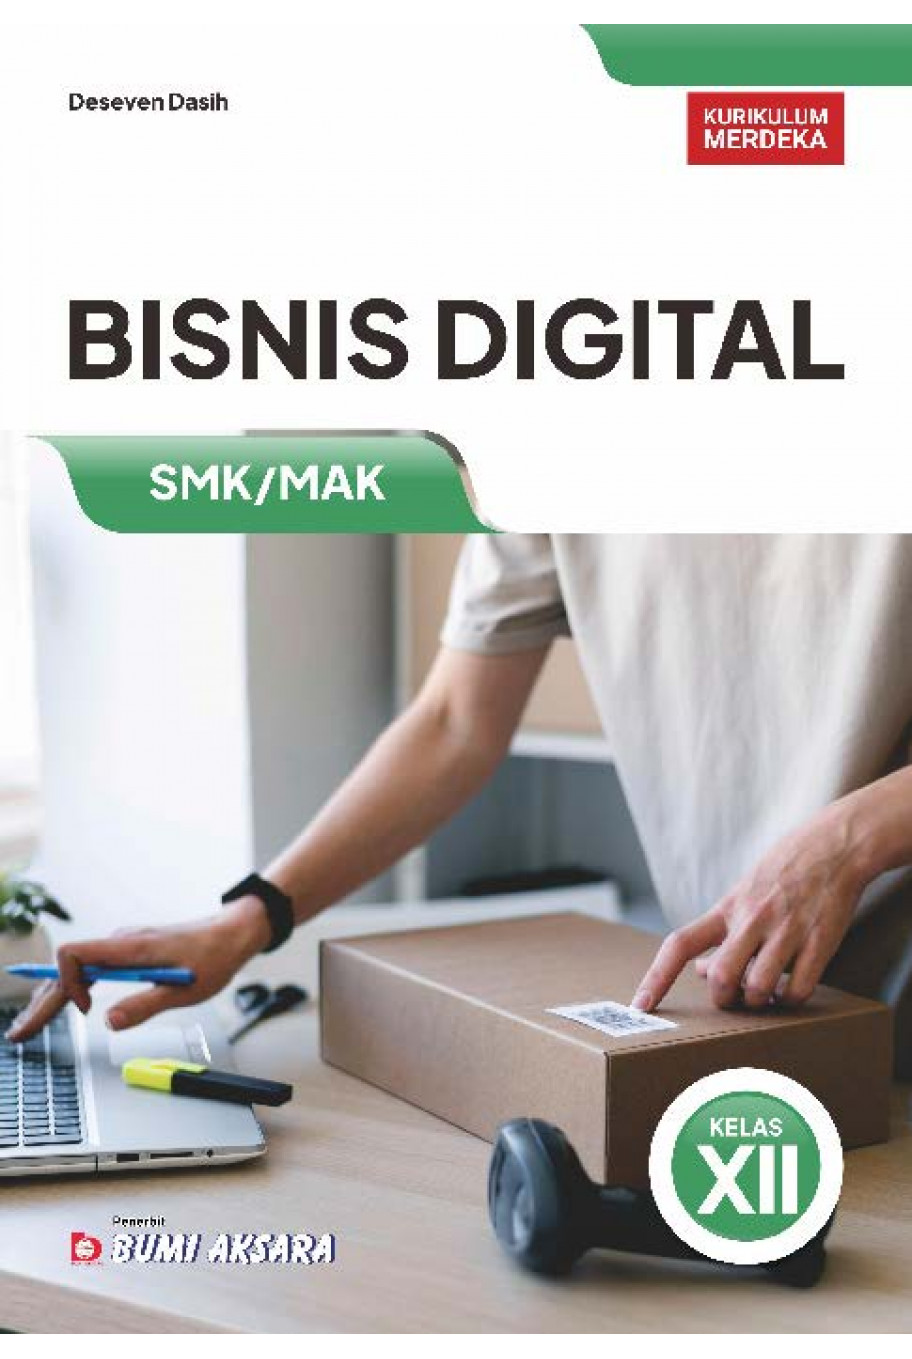 Bisnis Digital SMK/MAK Kelas XII